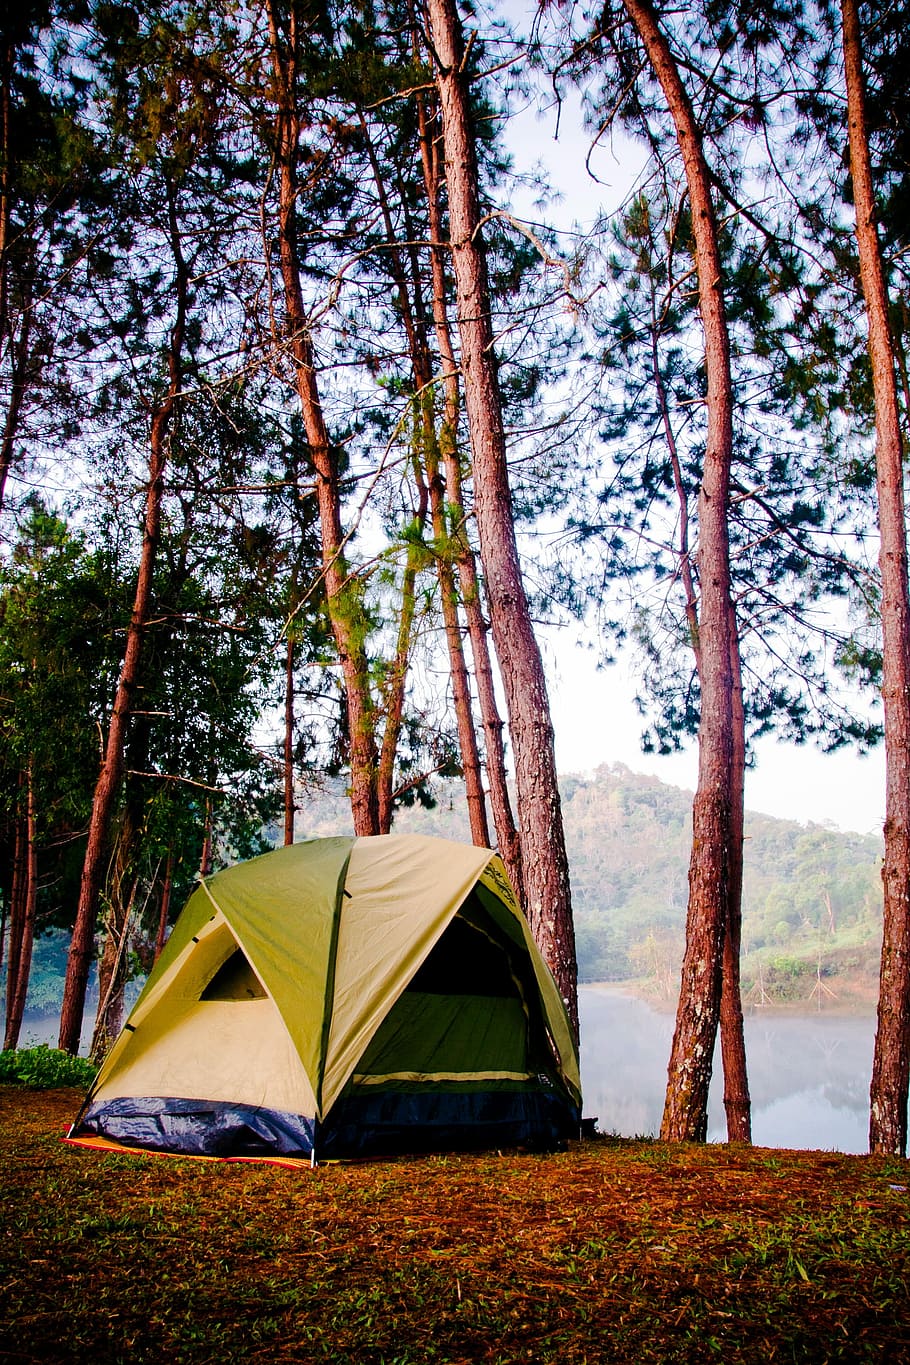 amarillo, azul, carpa, bosque, amarillo y azul, campamento, naturaleza, camping, aventura, al aire libre